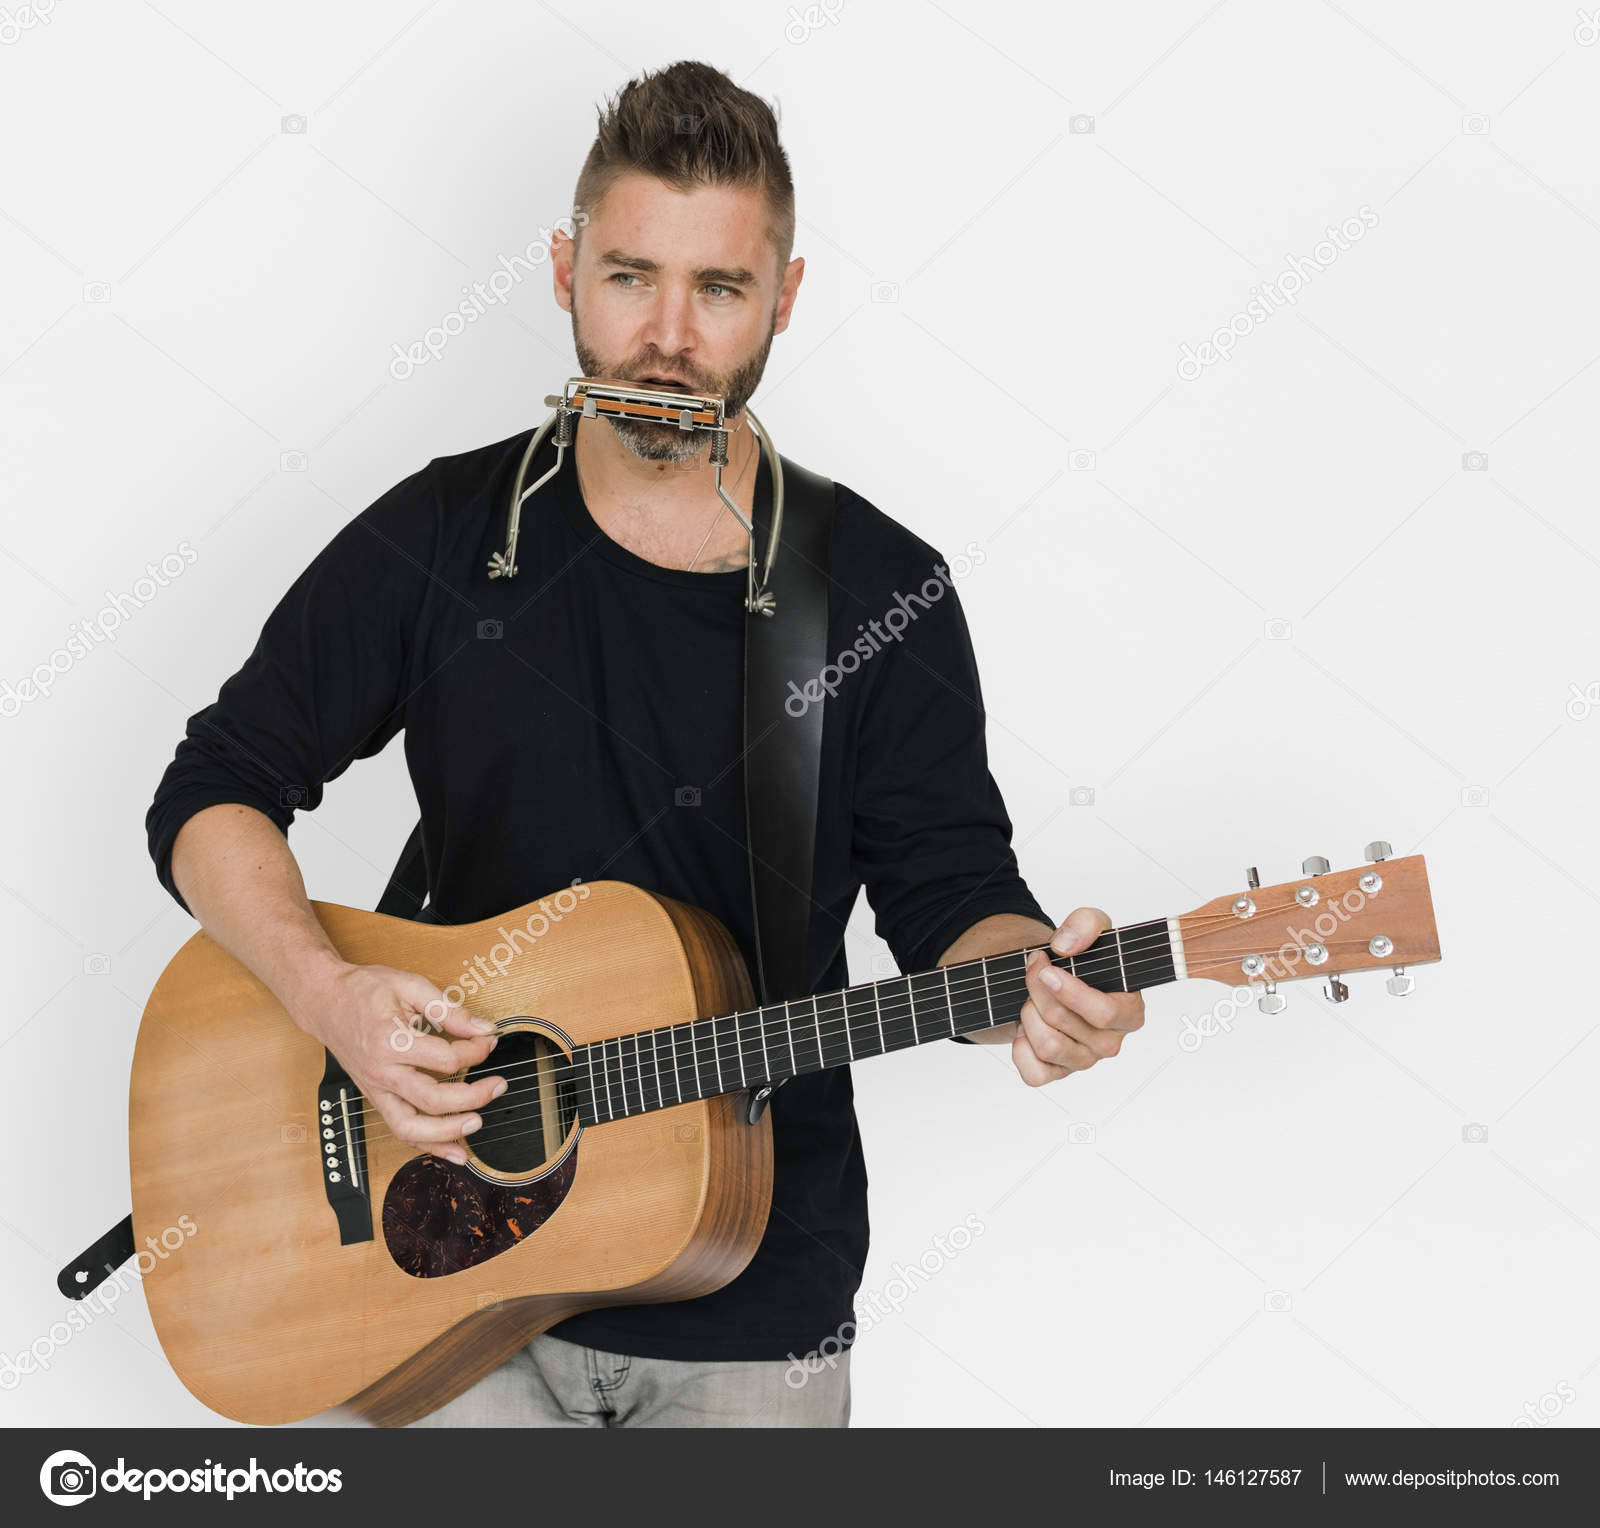 man Playing Guitar and Harmonica — Stock Photo © Rawpixel #146127587